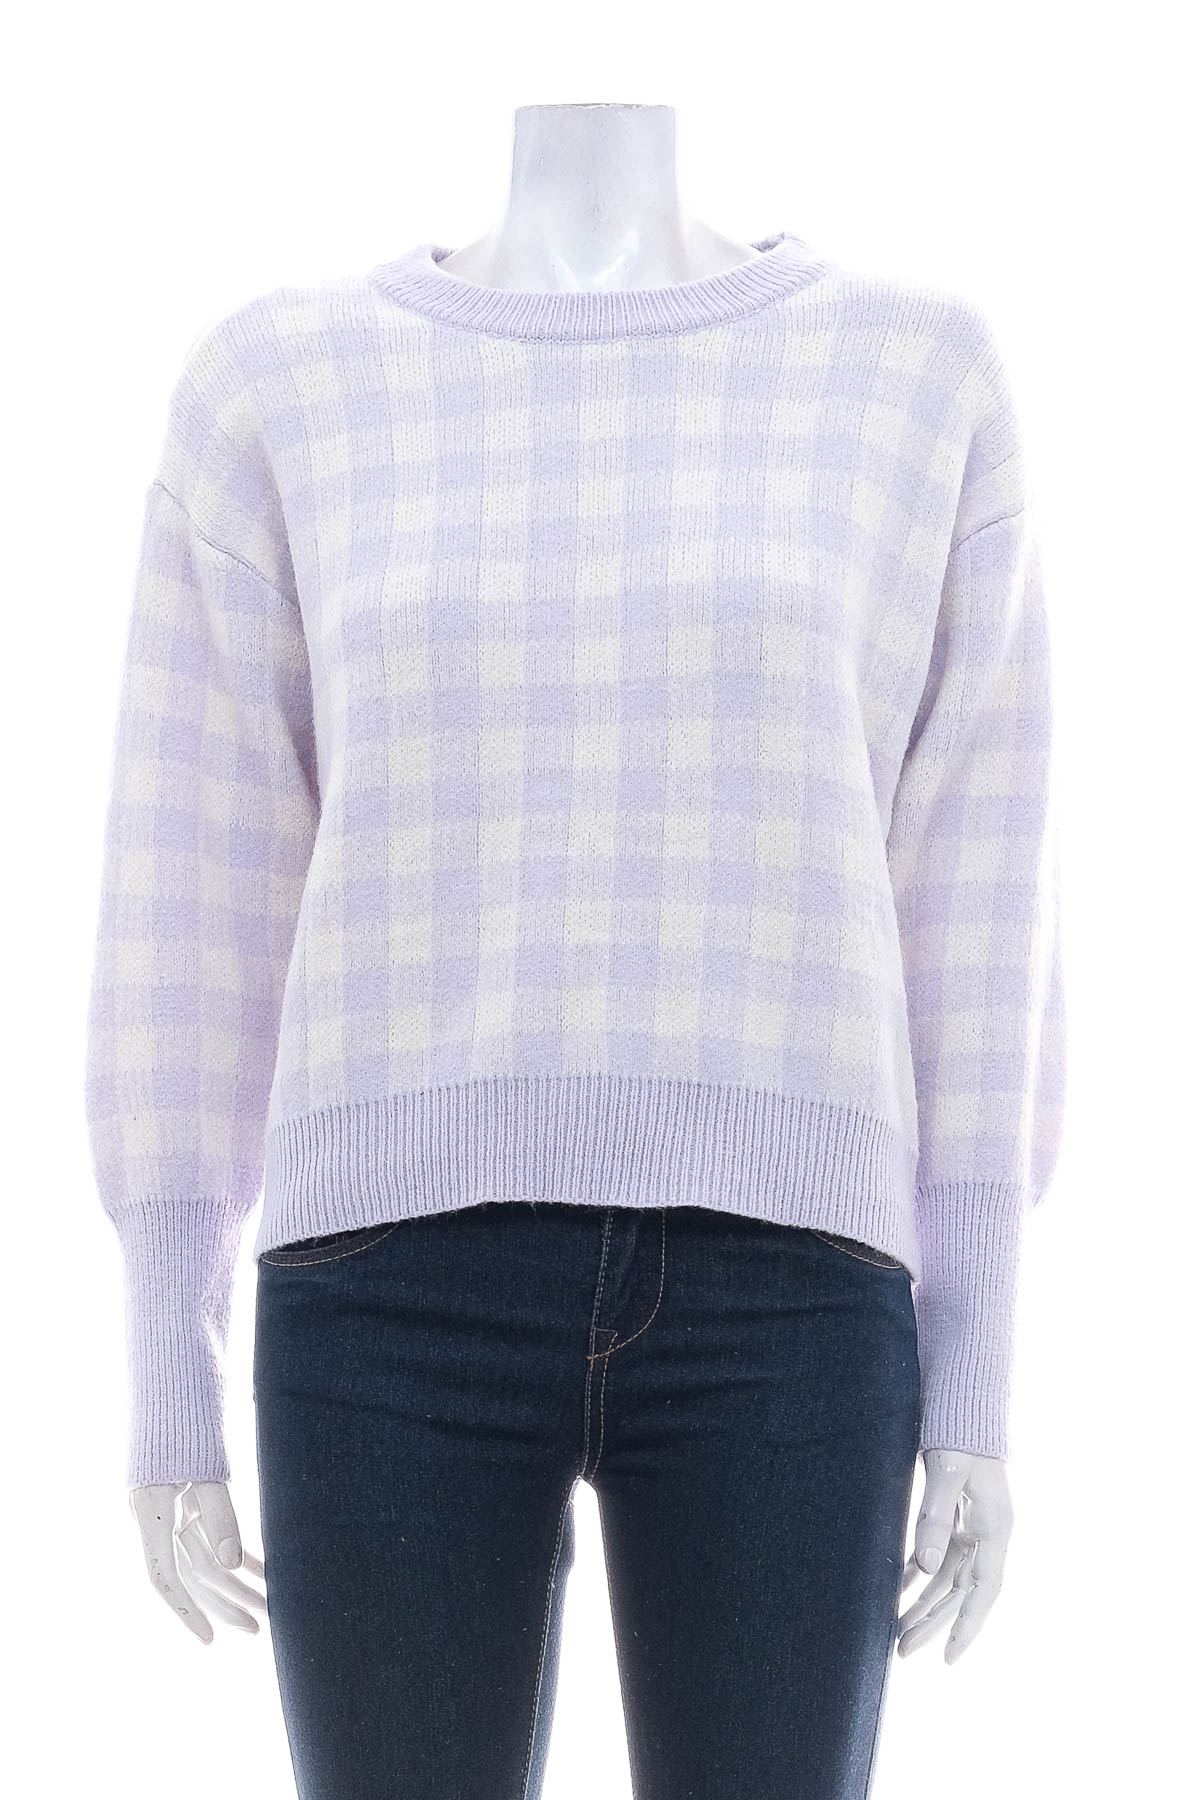 Women's sweater - Daphnea - 0